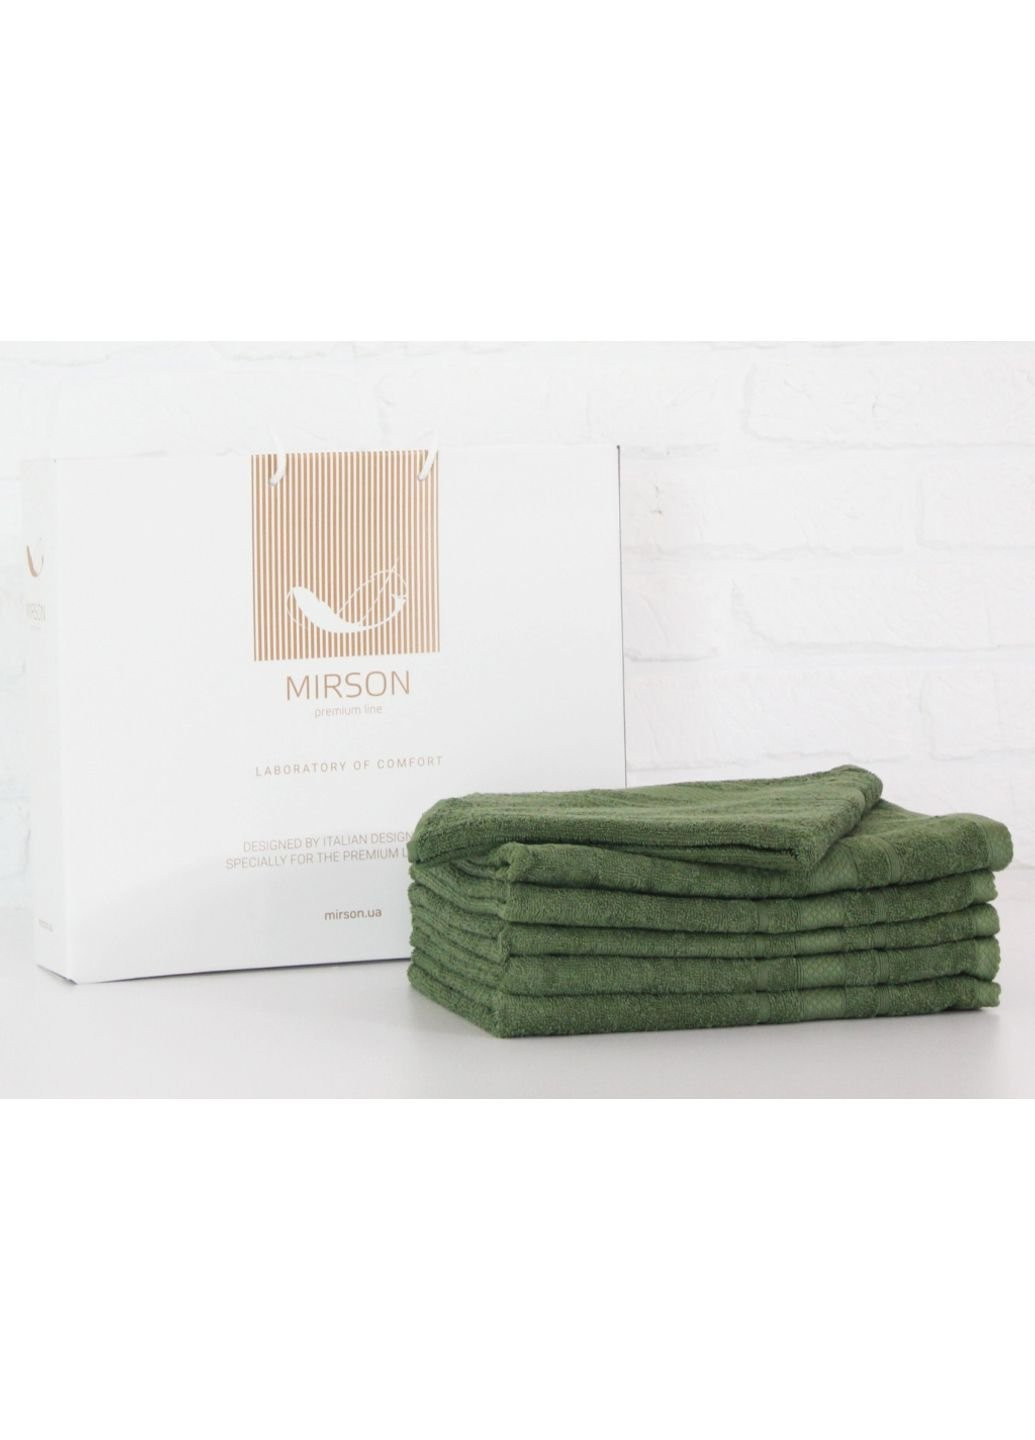 Mirson полотенце набор банных №5079 elite softness military 70х140 6 шт (2200003524192) зеленый производство - Украина